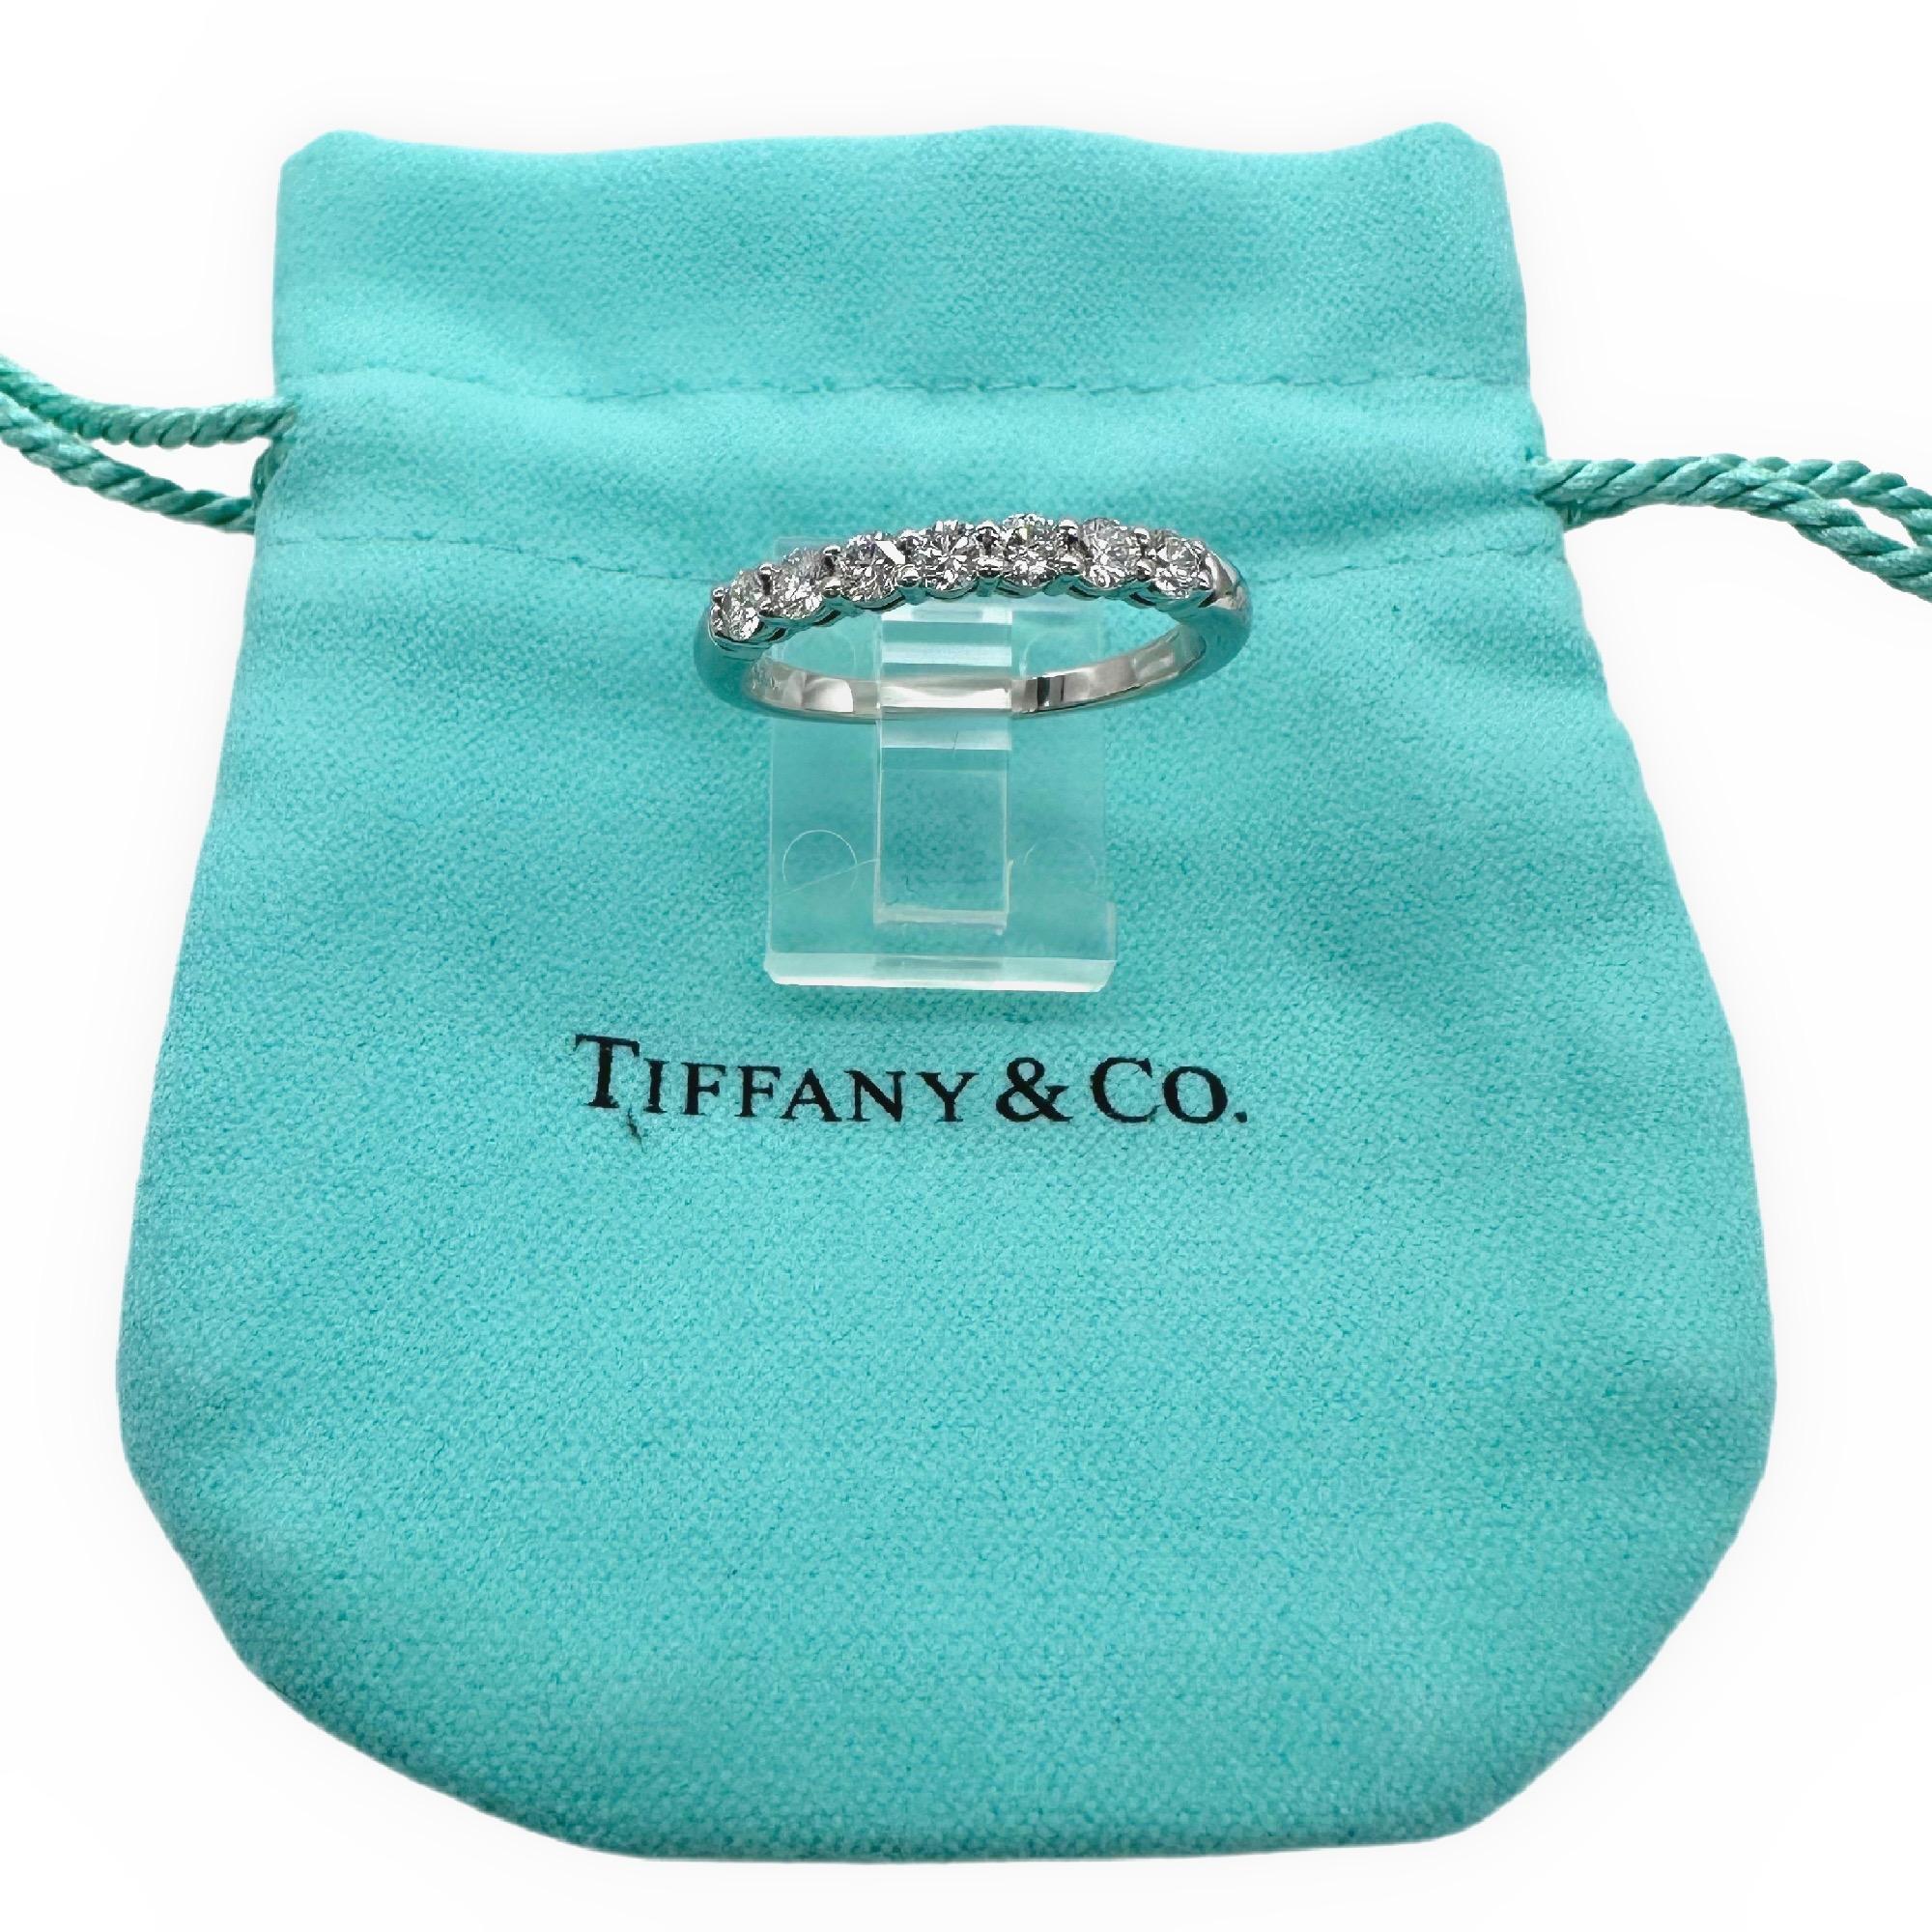 Tiffany & Co. FOREVER Half Circle Diamond Band Ring
Style:   Half-circle Band
Metal:  Platinum PT950
Size:  9 sizable
Measurements:  3 MM
TCW:  0.57 tcw
Diamond:  7 Round Brilliant Diamonds
Hallmark:  ©TIFFANY&CO. PT50
Includes:  T&C Jewelry